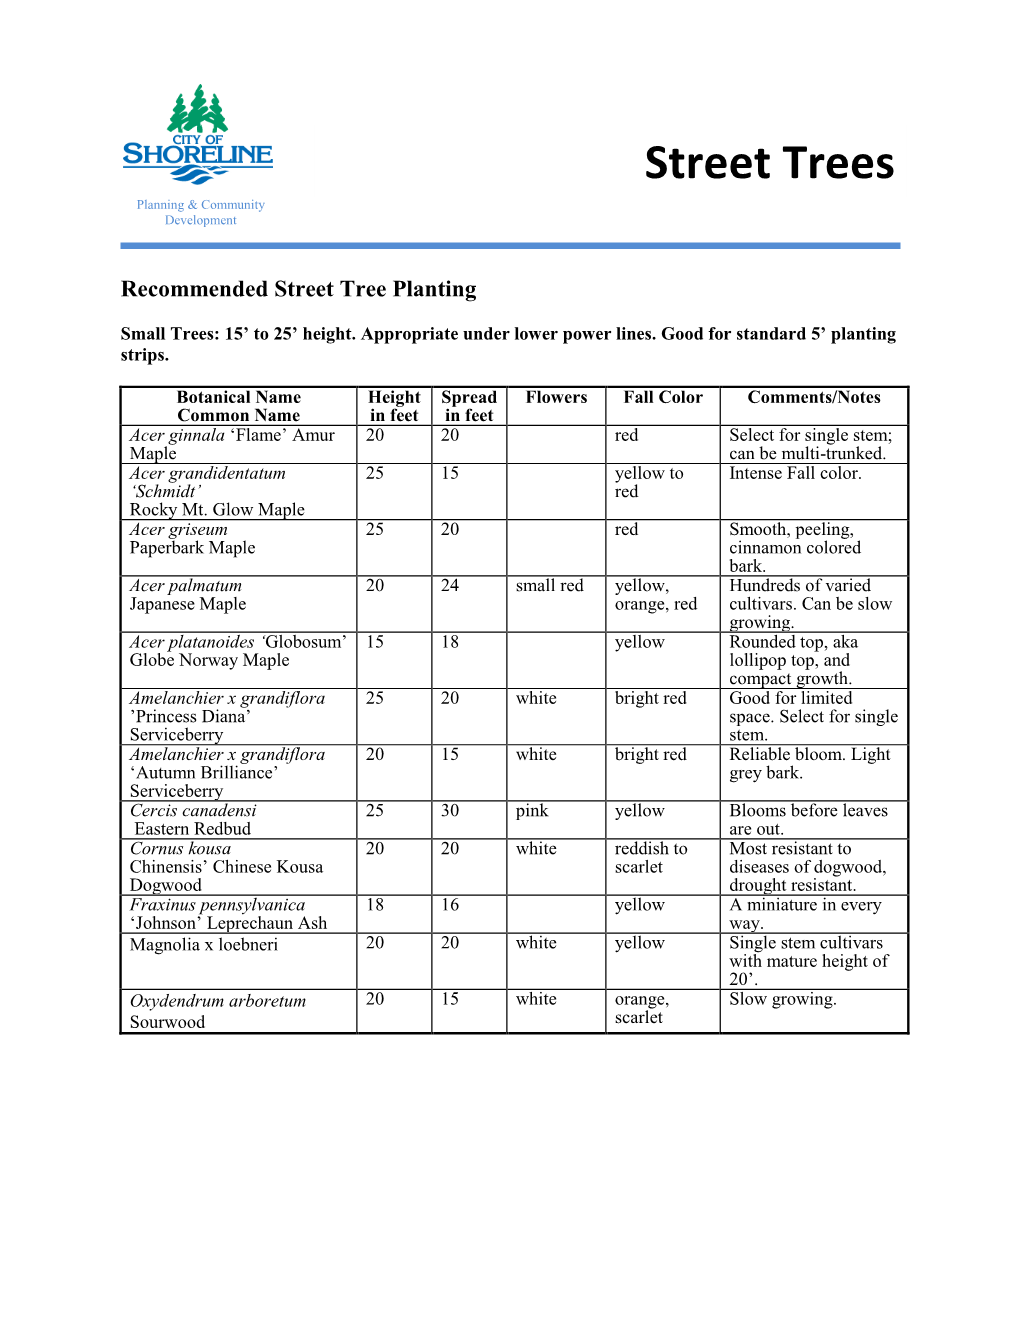 Street Trees Planning & Community Development